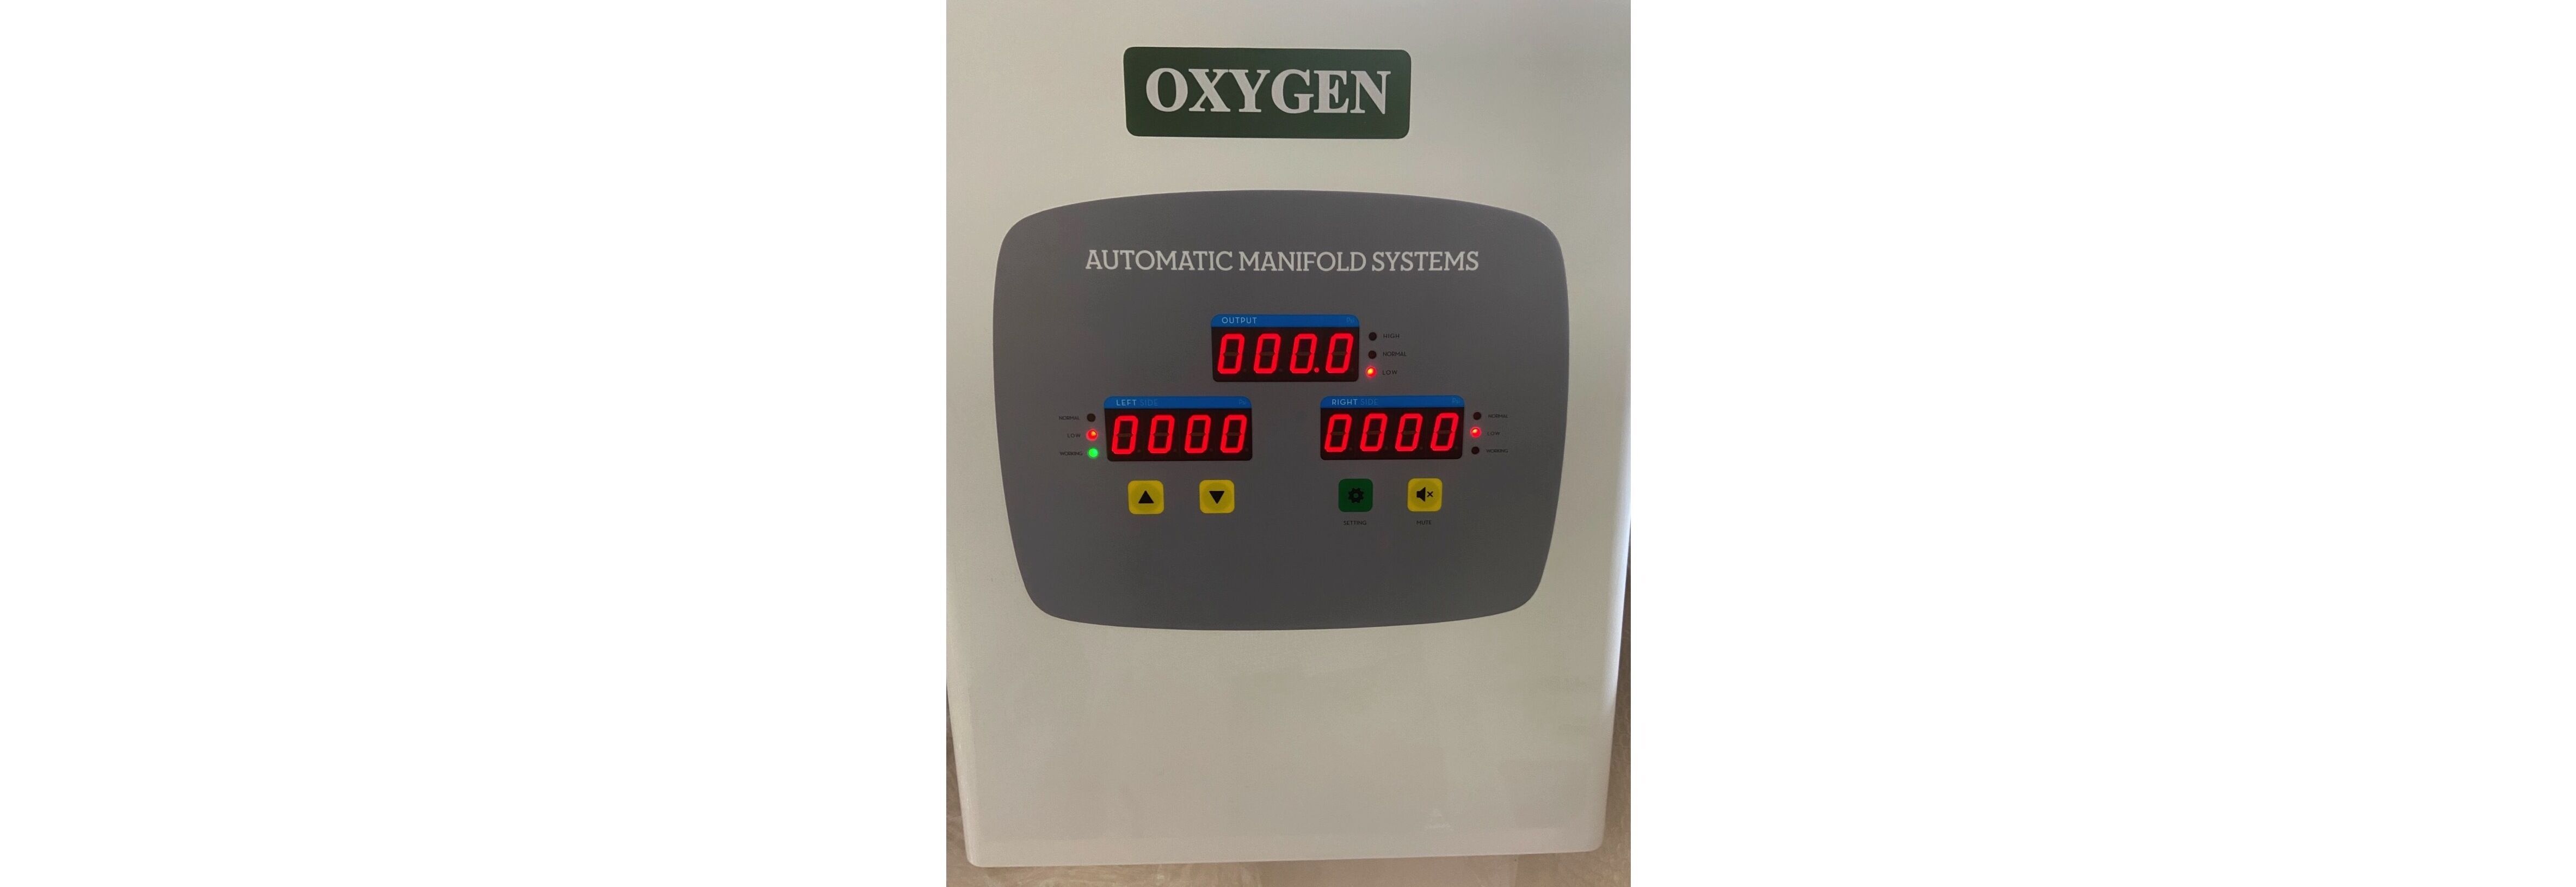 Digital Automatic Manifold for Medical Cylinder Gas Station_เครื่องควบคุมการจ่ายก๊าซจากถังก๊าซทางการ